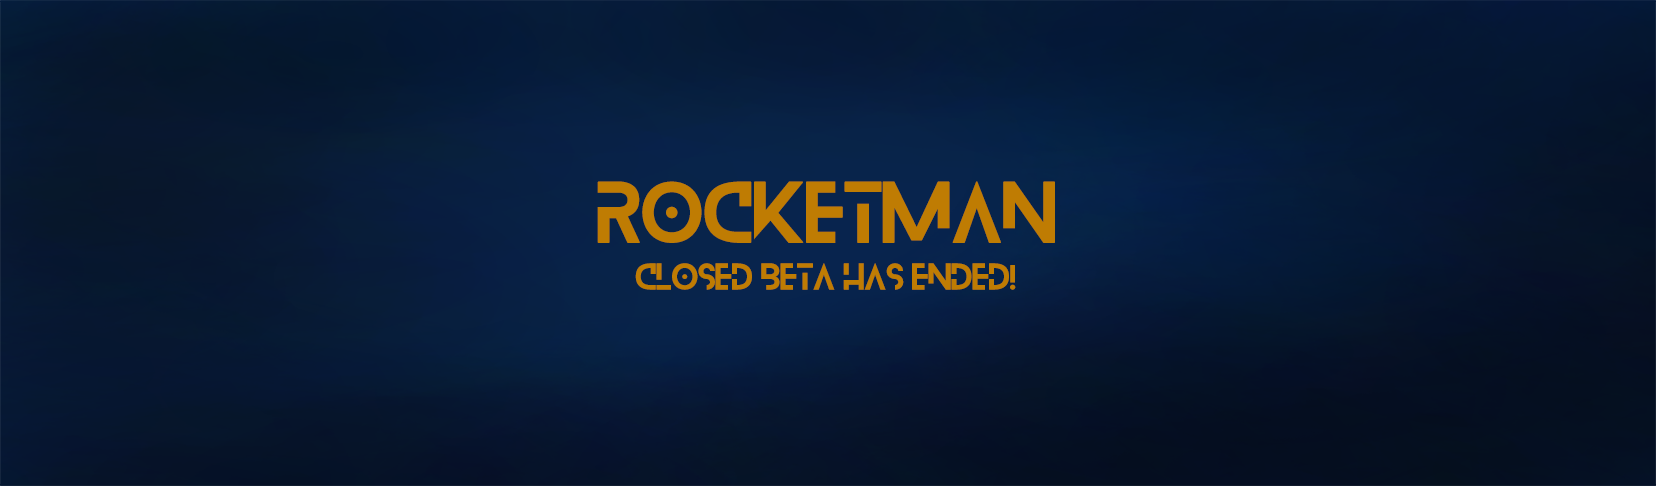 Closed Beta of Rocketman ended